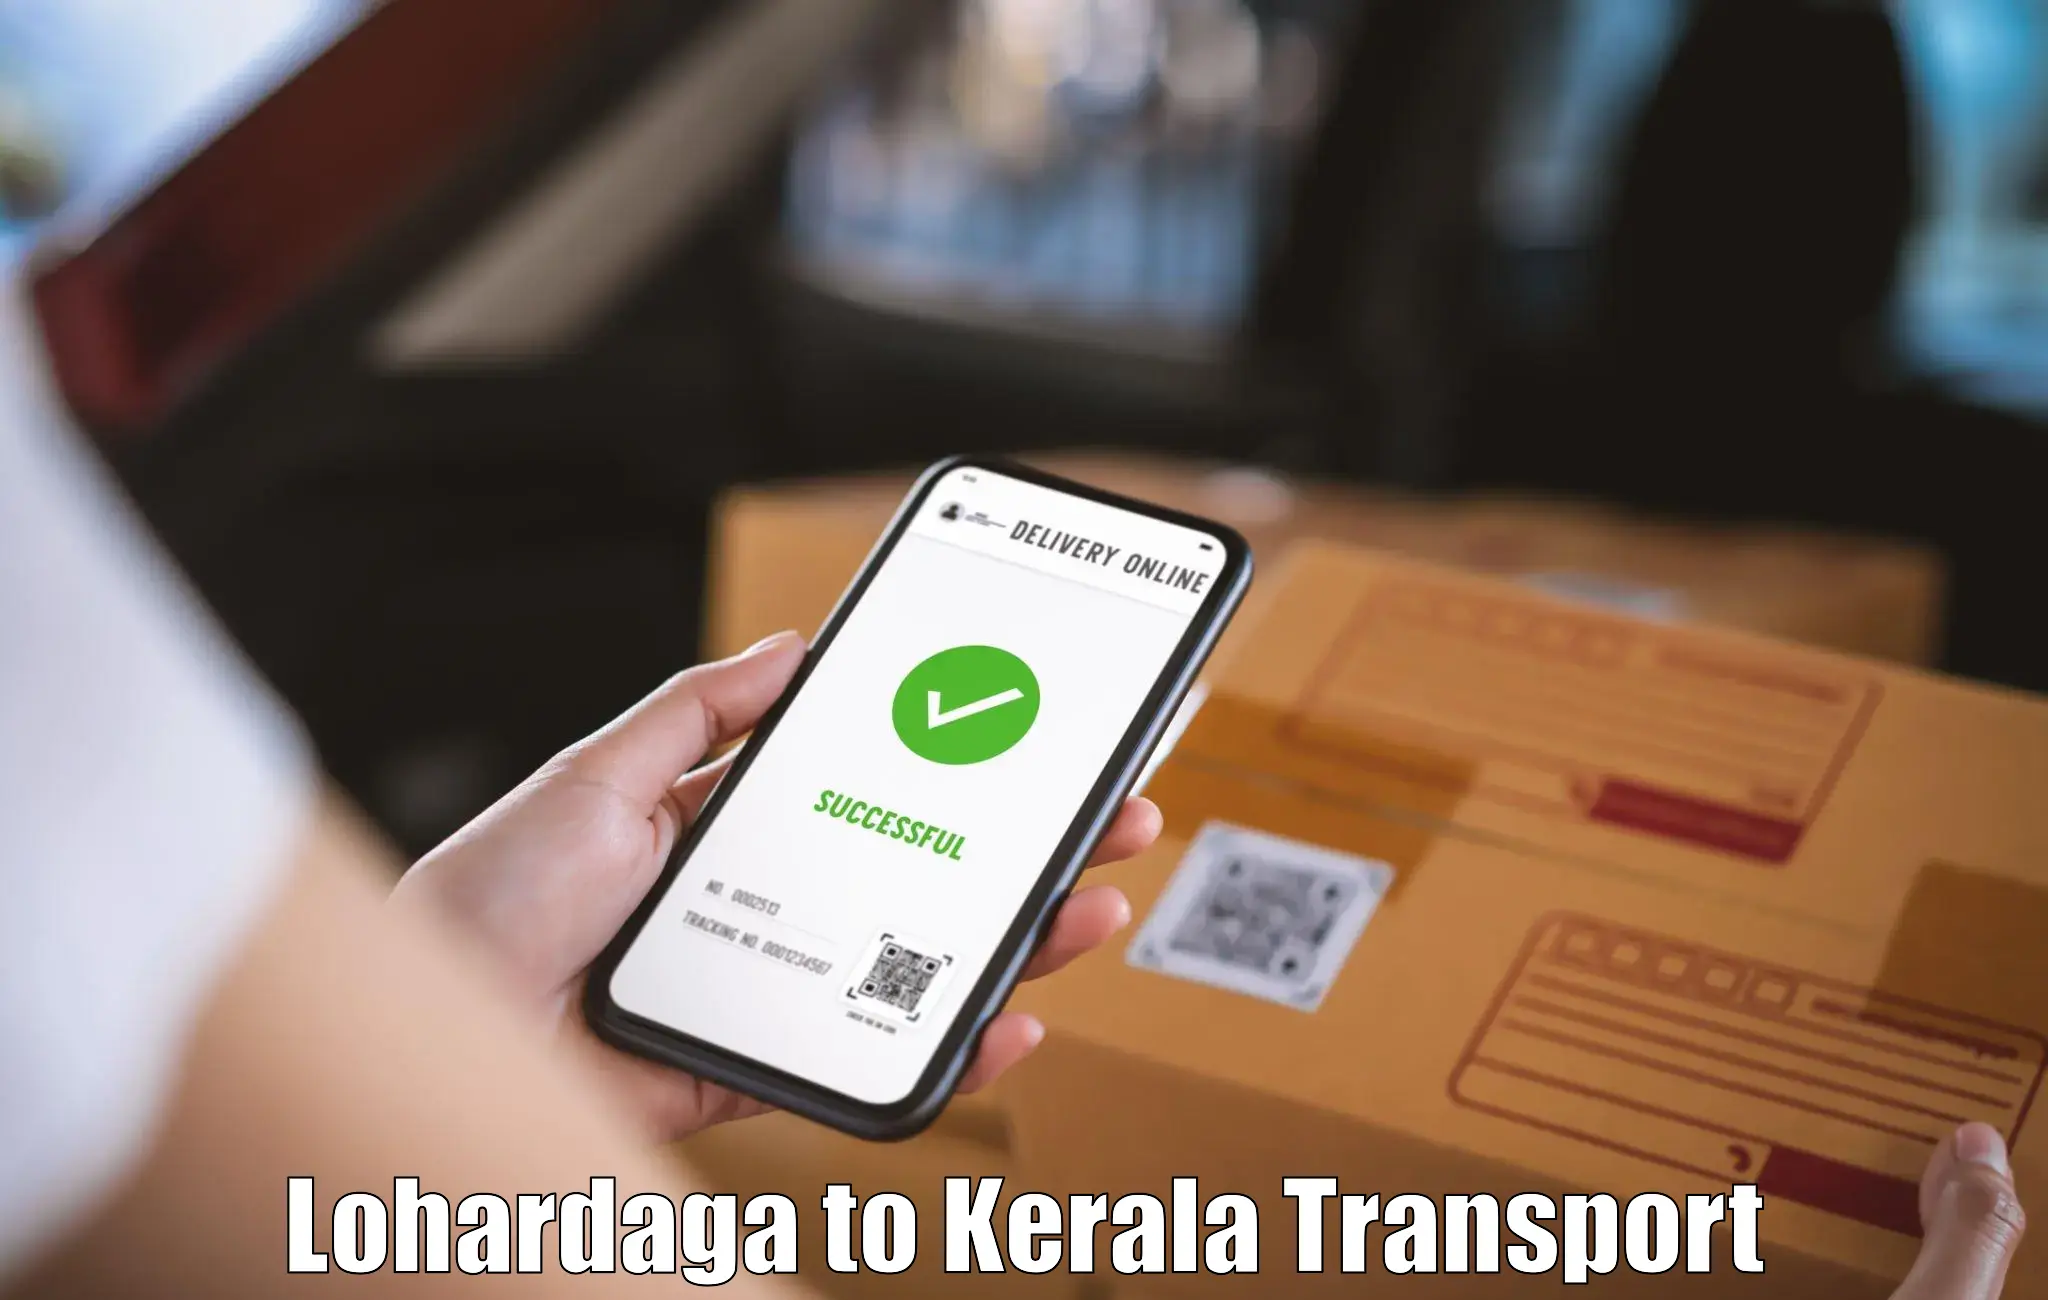 Transport bike from one state to another Lohardaga to Kochi